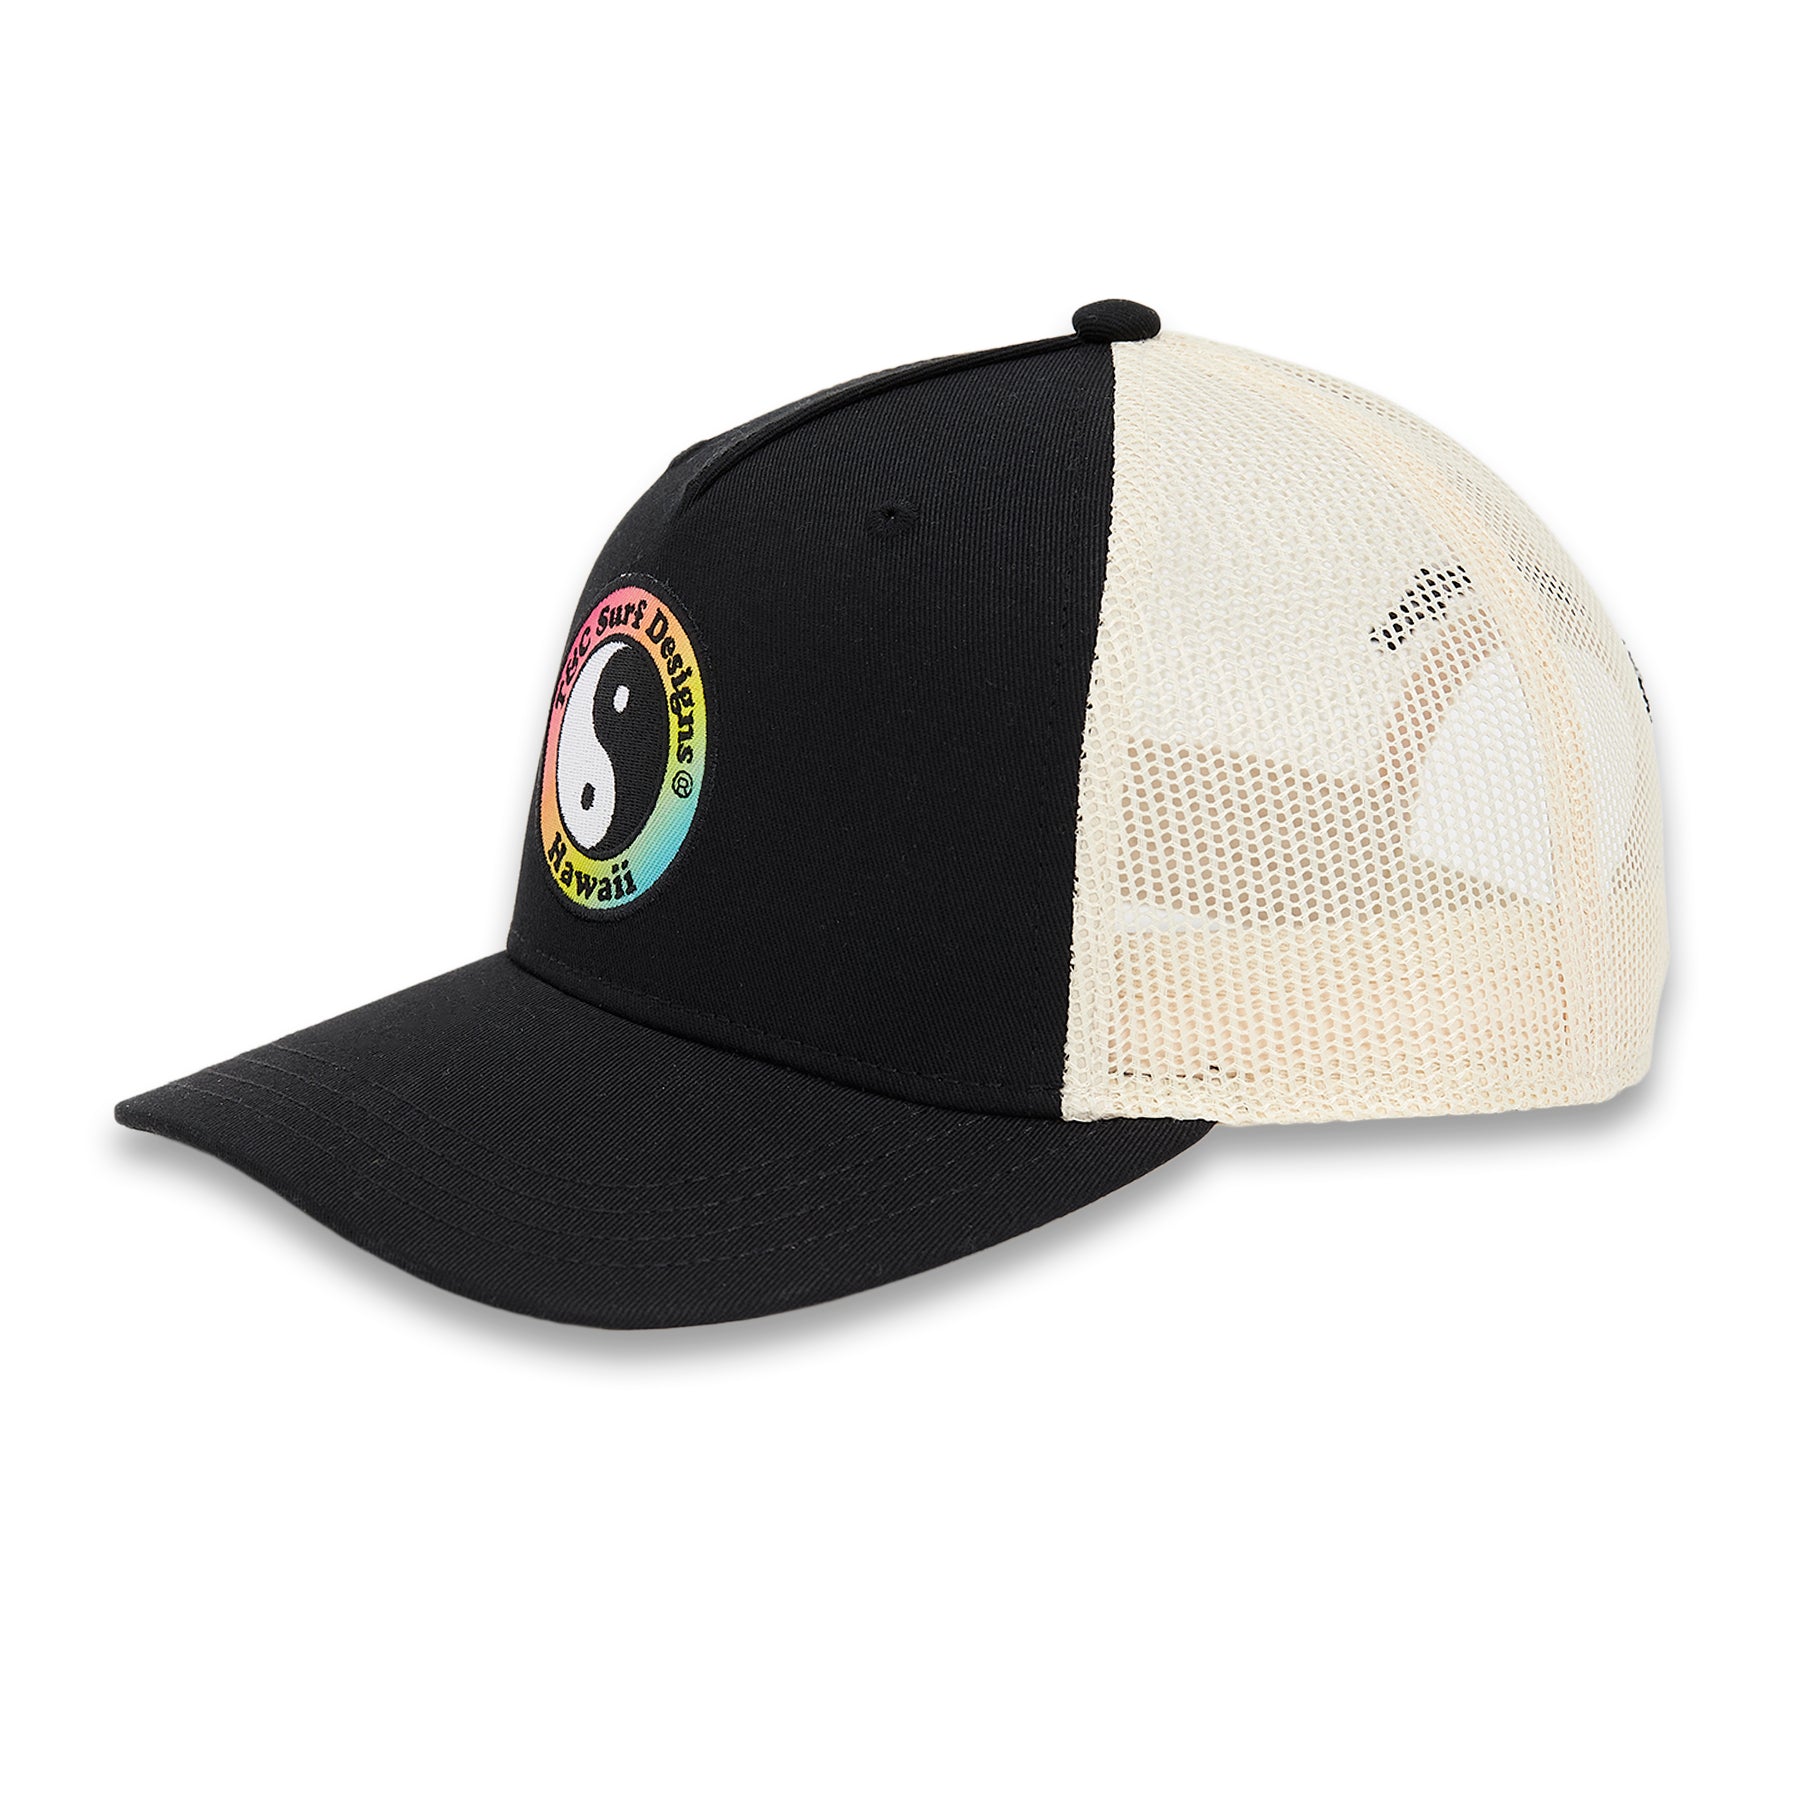 T&C Surf Designs YY Trucker Cap - Black Off White Gradient logo